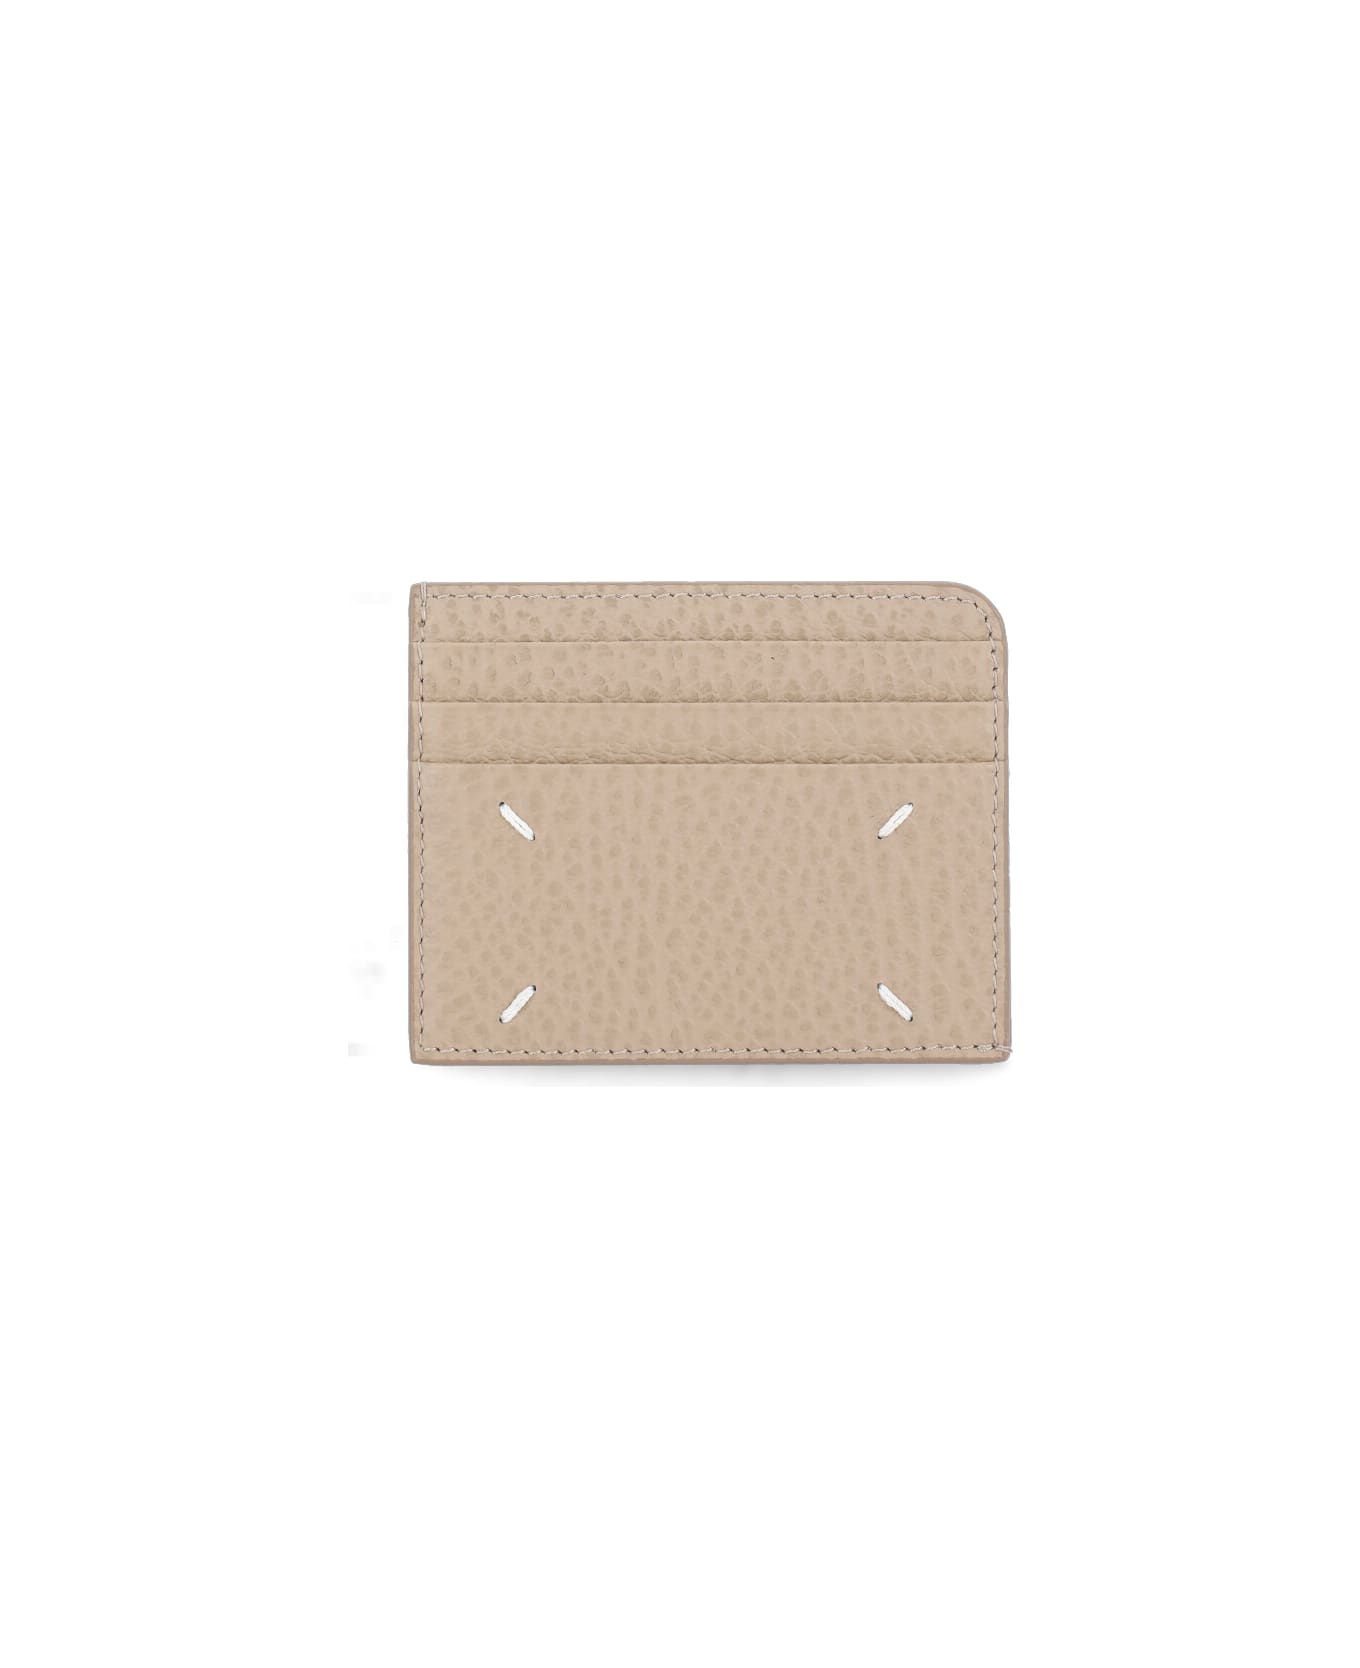 Maison Margiela Four Stitches Card Holder - Biche 財布